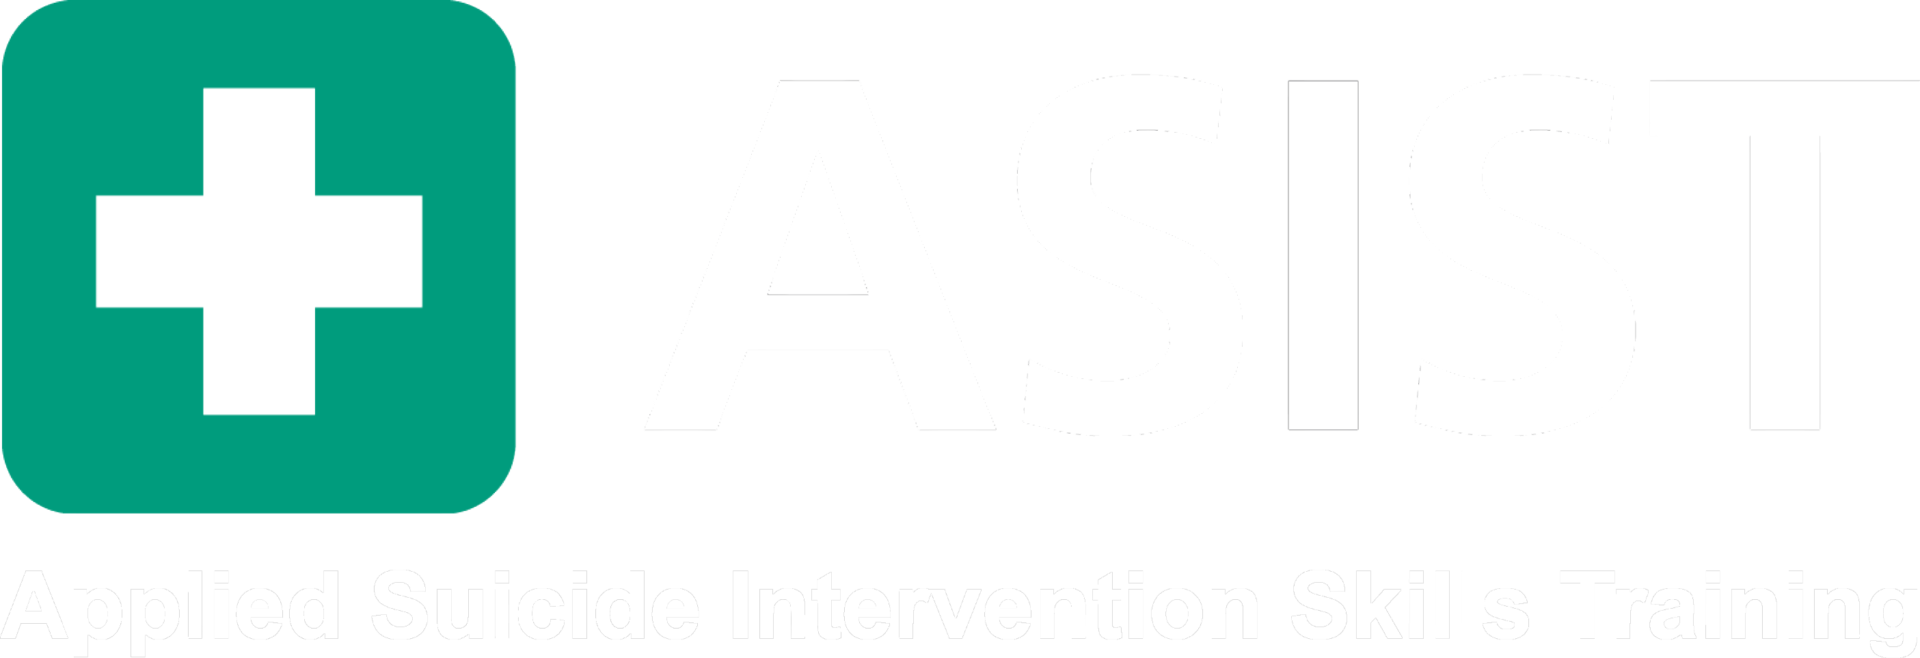 ASIST-banner